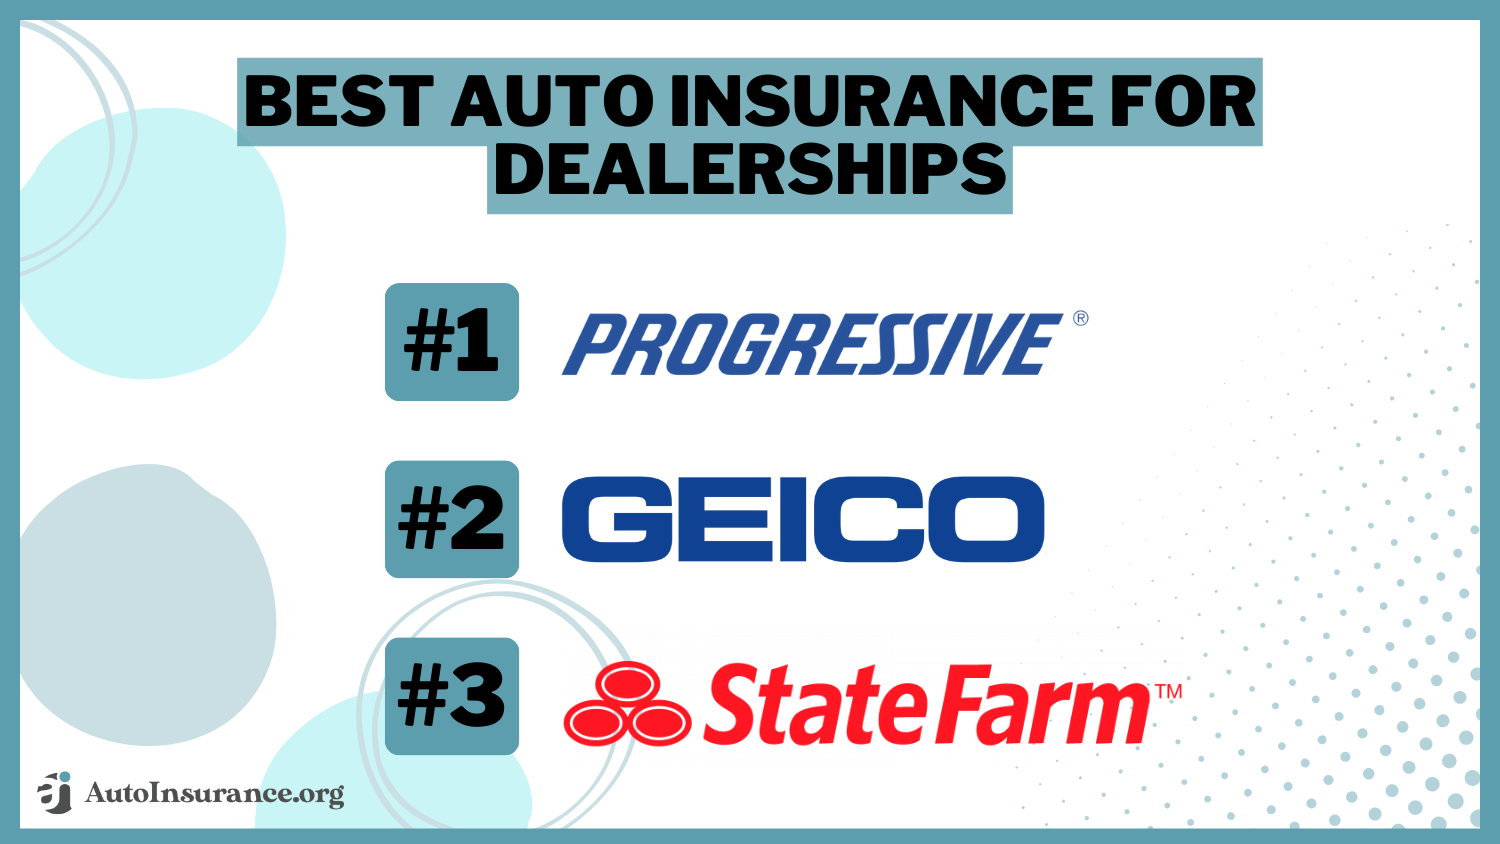 Best Auto Insurance Companies for Dealerships: Progressive, Geico, State Farm